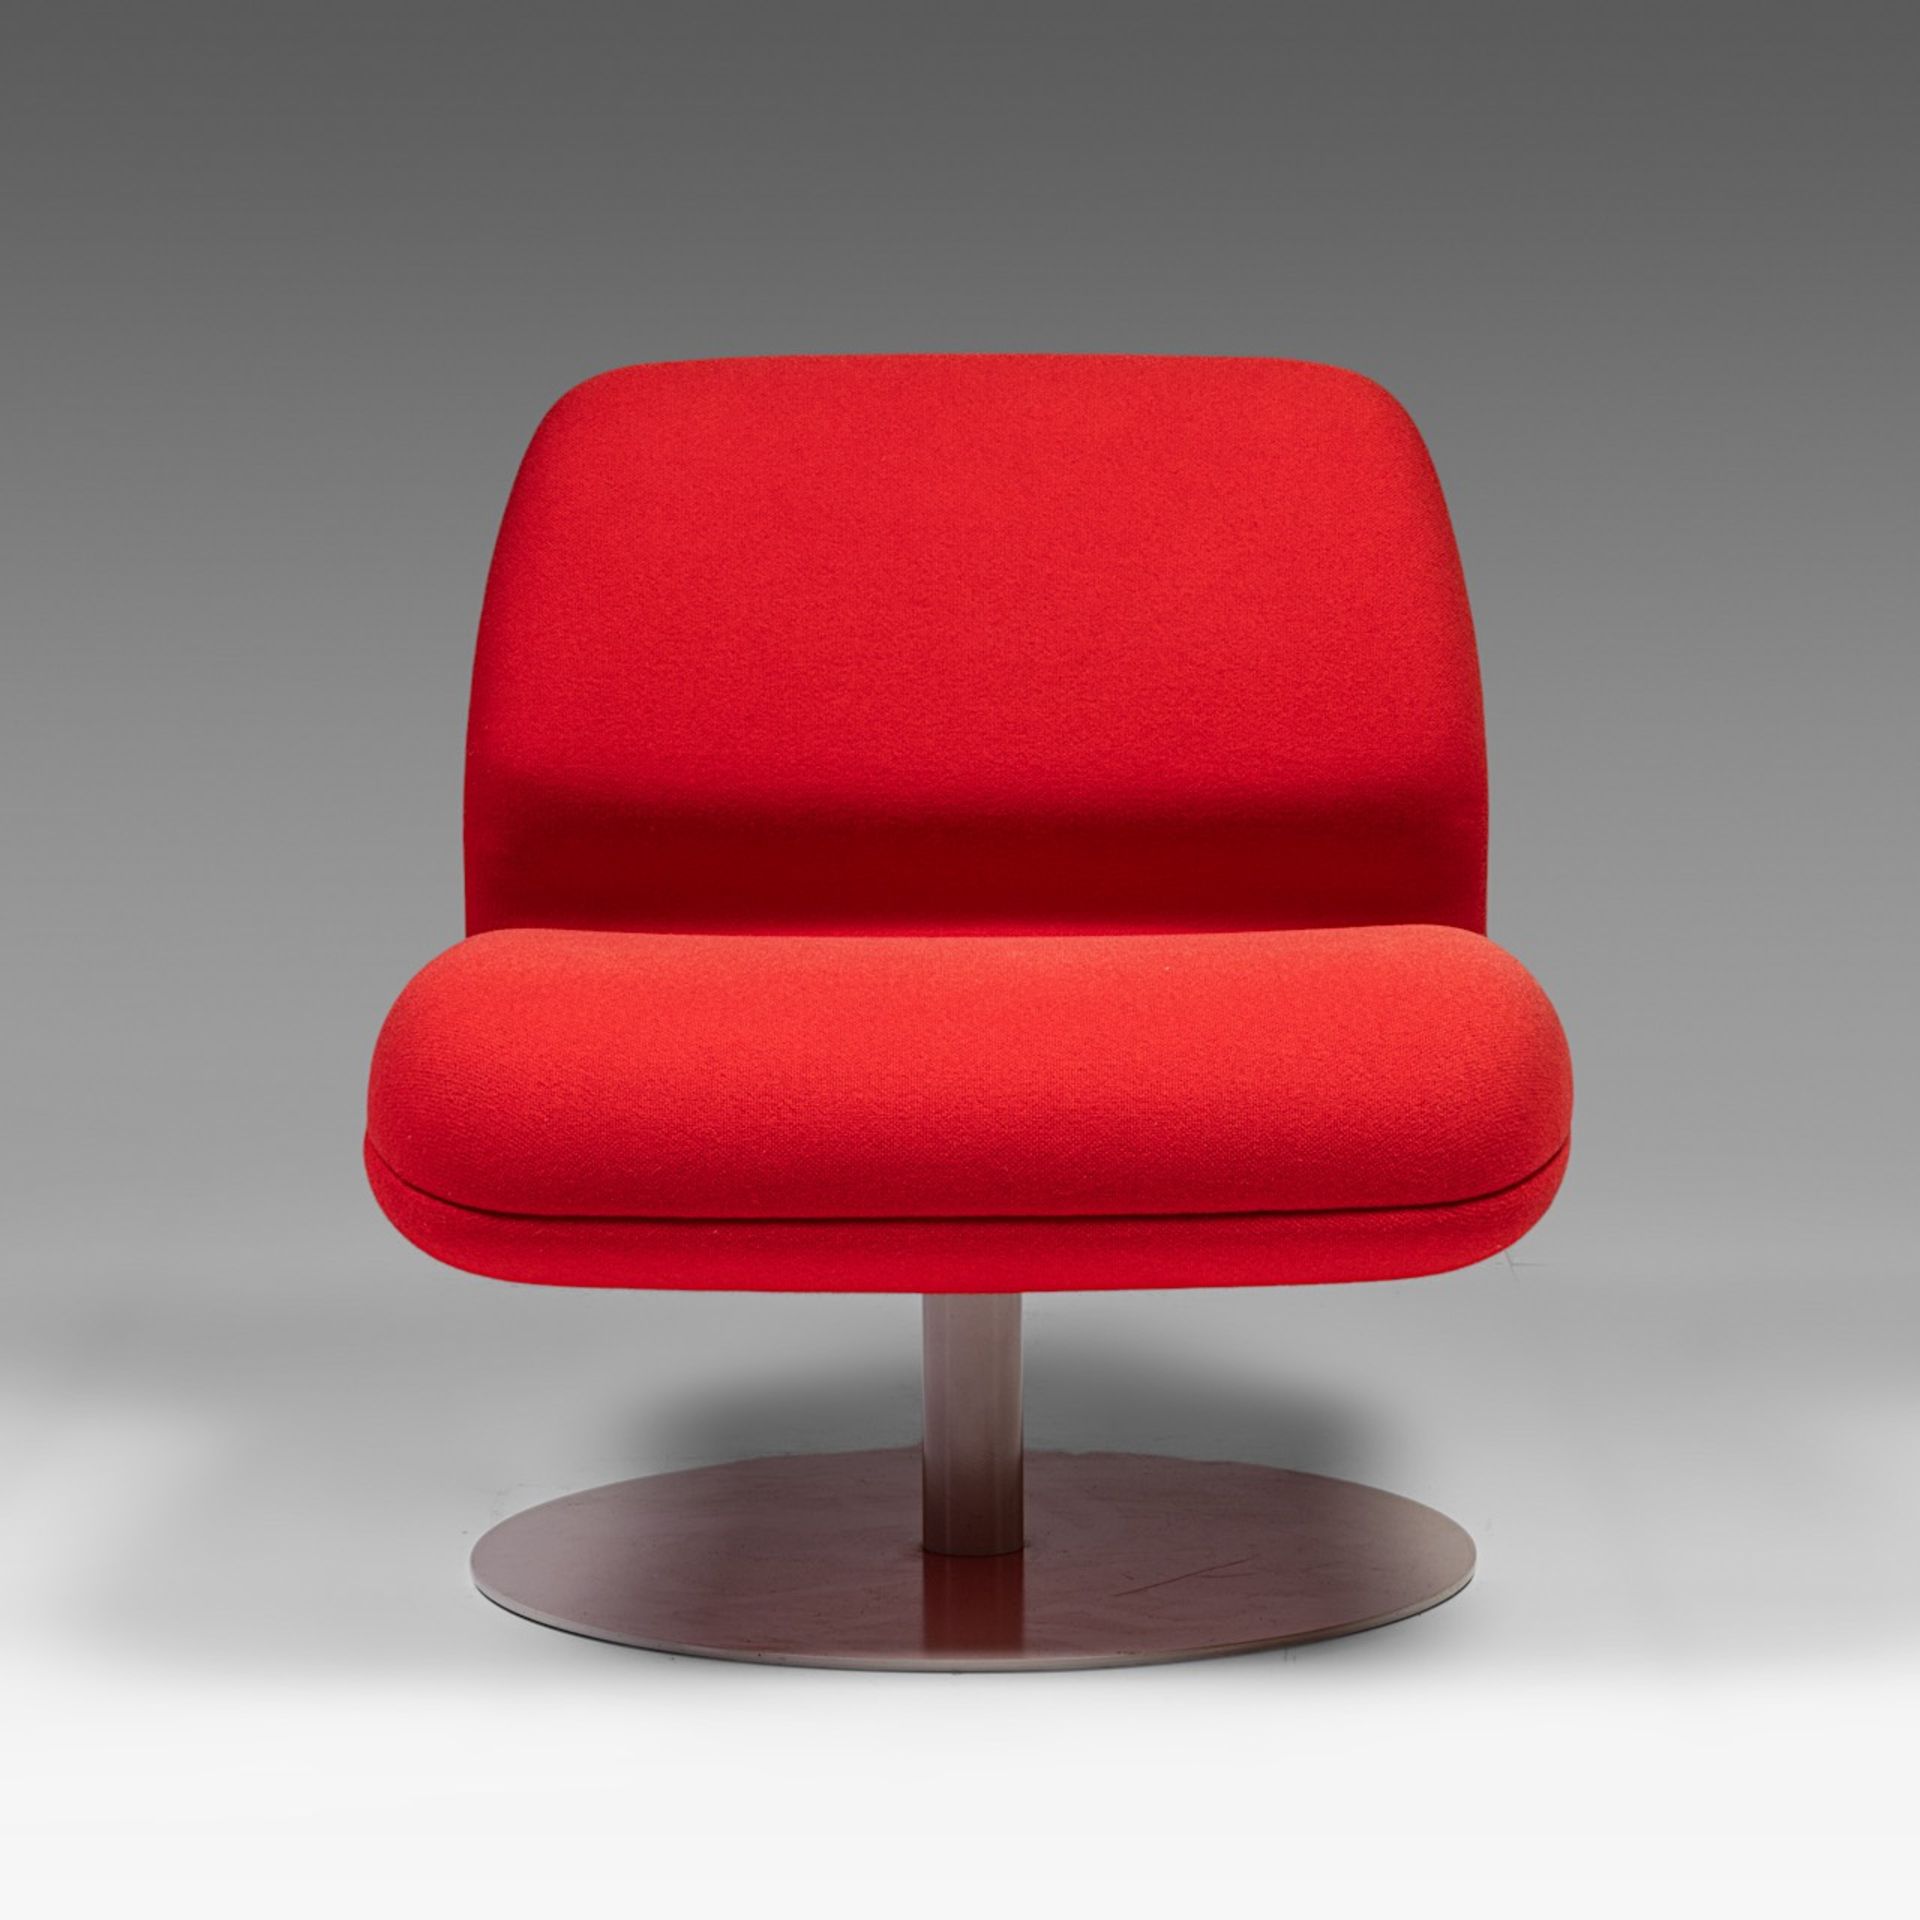 An 'Attitude' chair by Morten Voss for Fritz Hansen, Danmark, 2005, H 70 - W 65 cm - Image 2 of 10